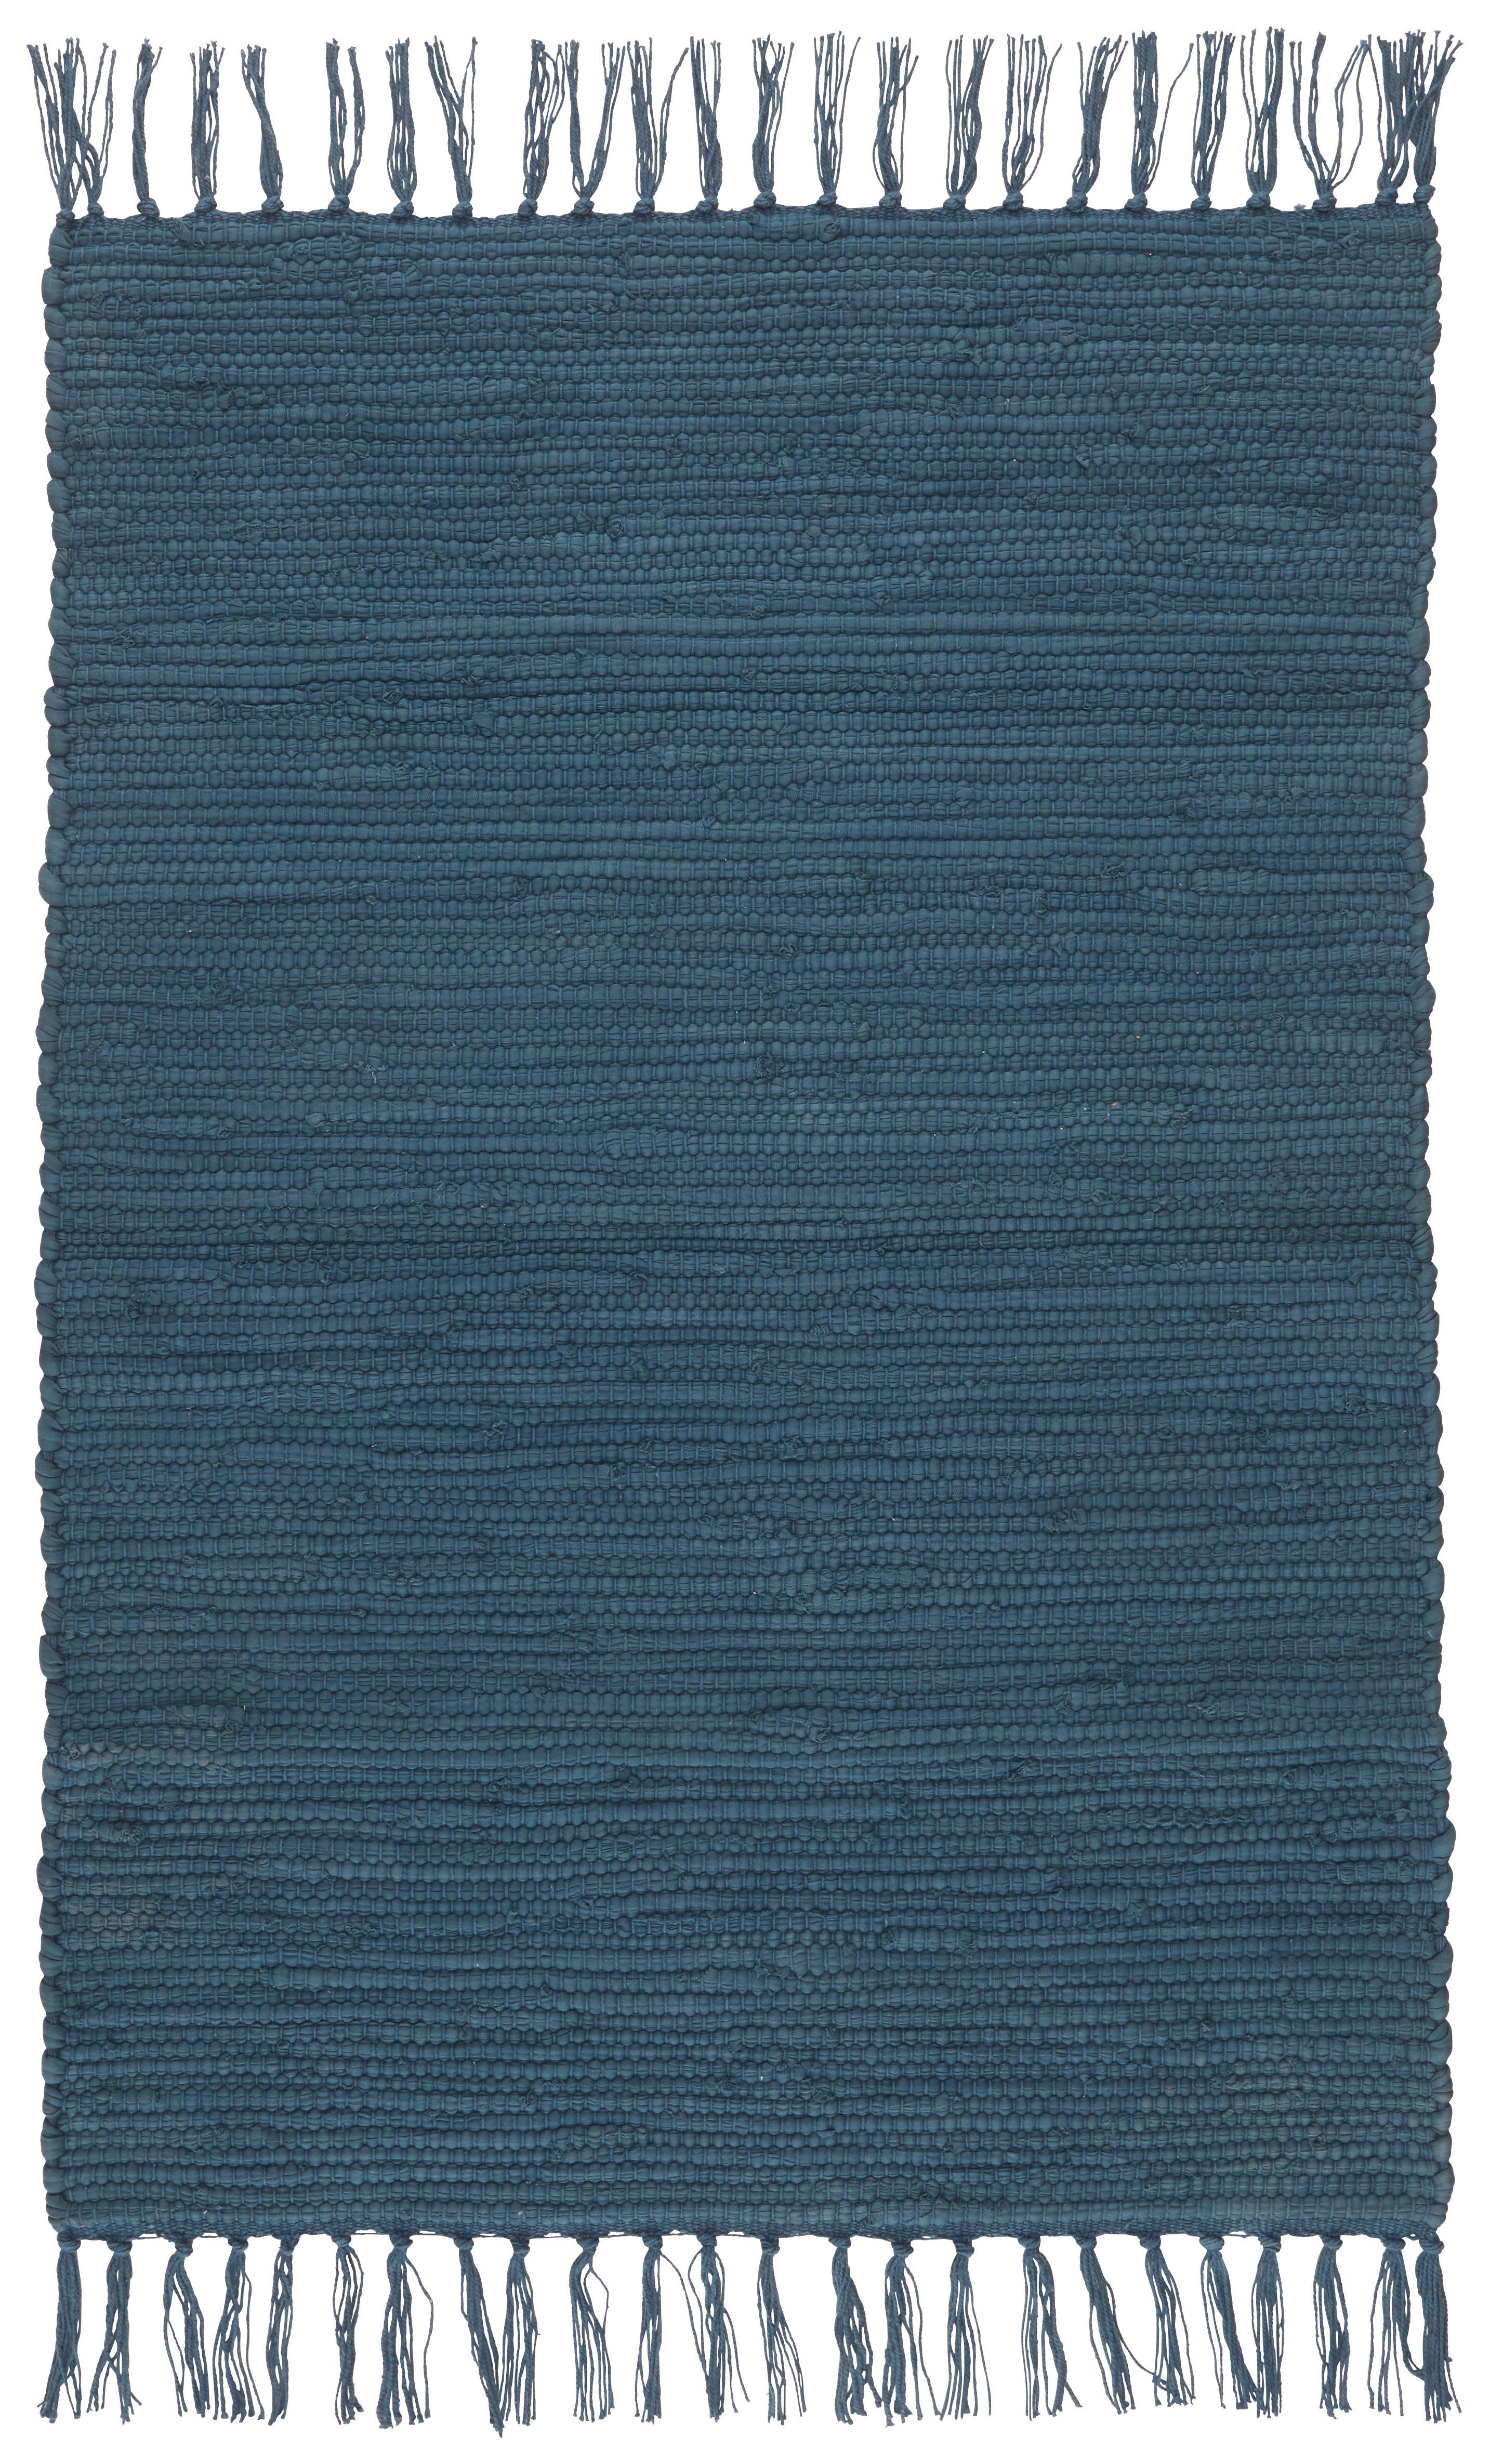 Covor din cârpe Julia 1 - albastru închis, Romantik / Landhaus, textil (60/90cm) - Modern Living